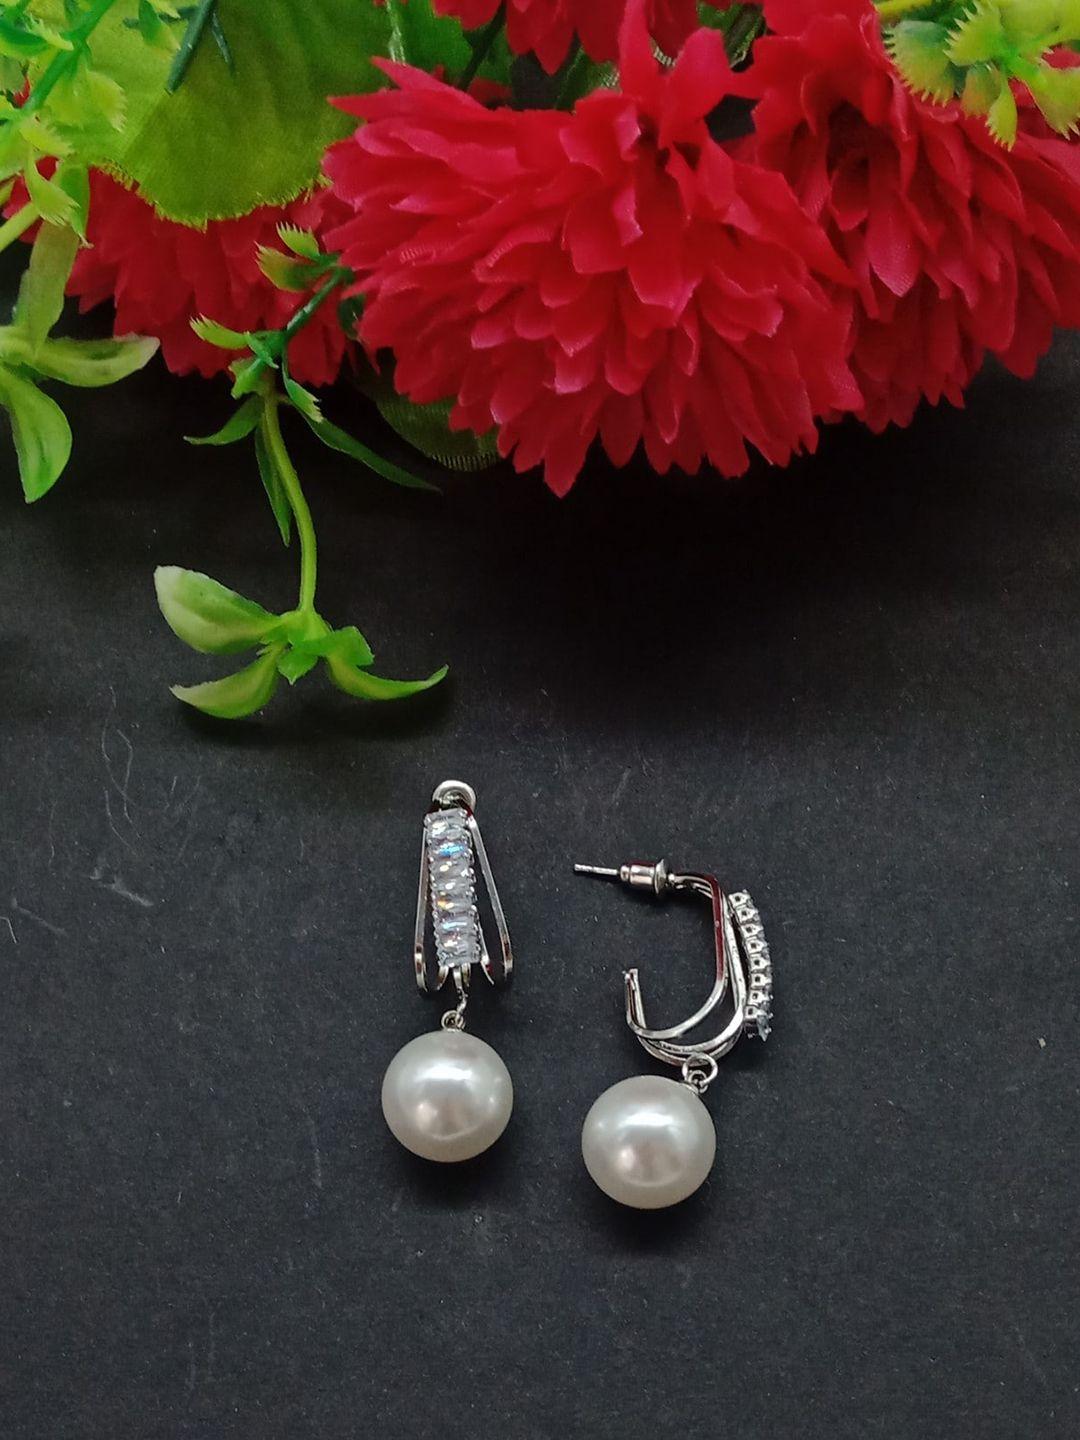 aashish imitation silver-plated american diamond contemporary drop earrings